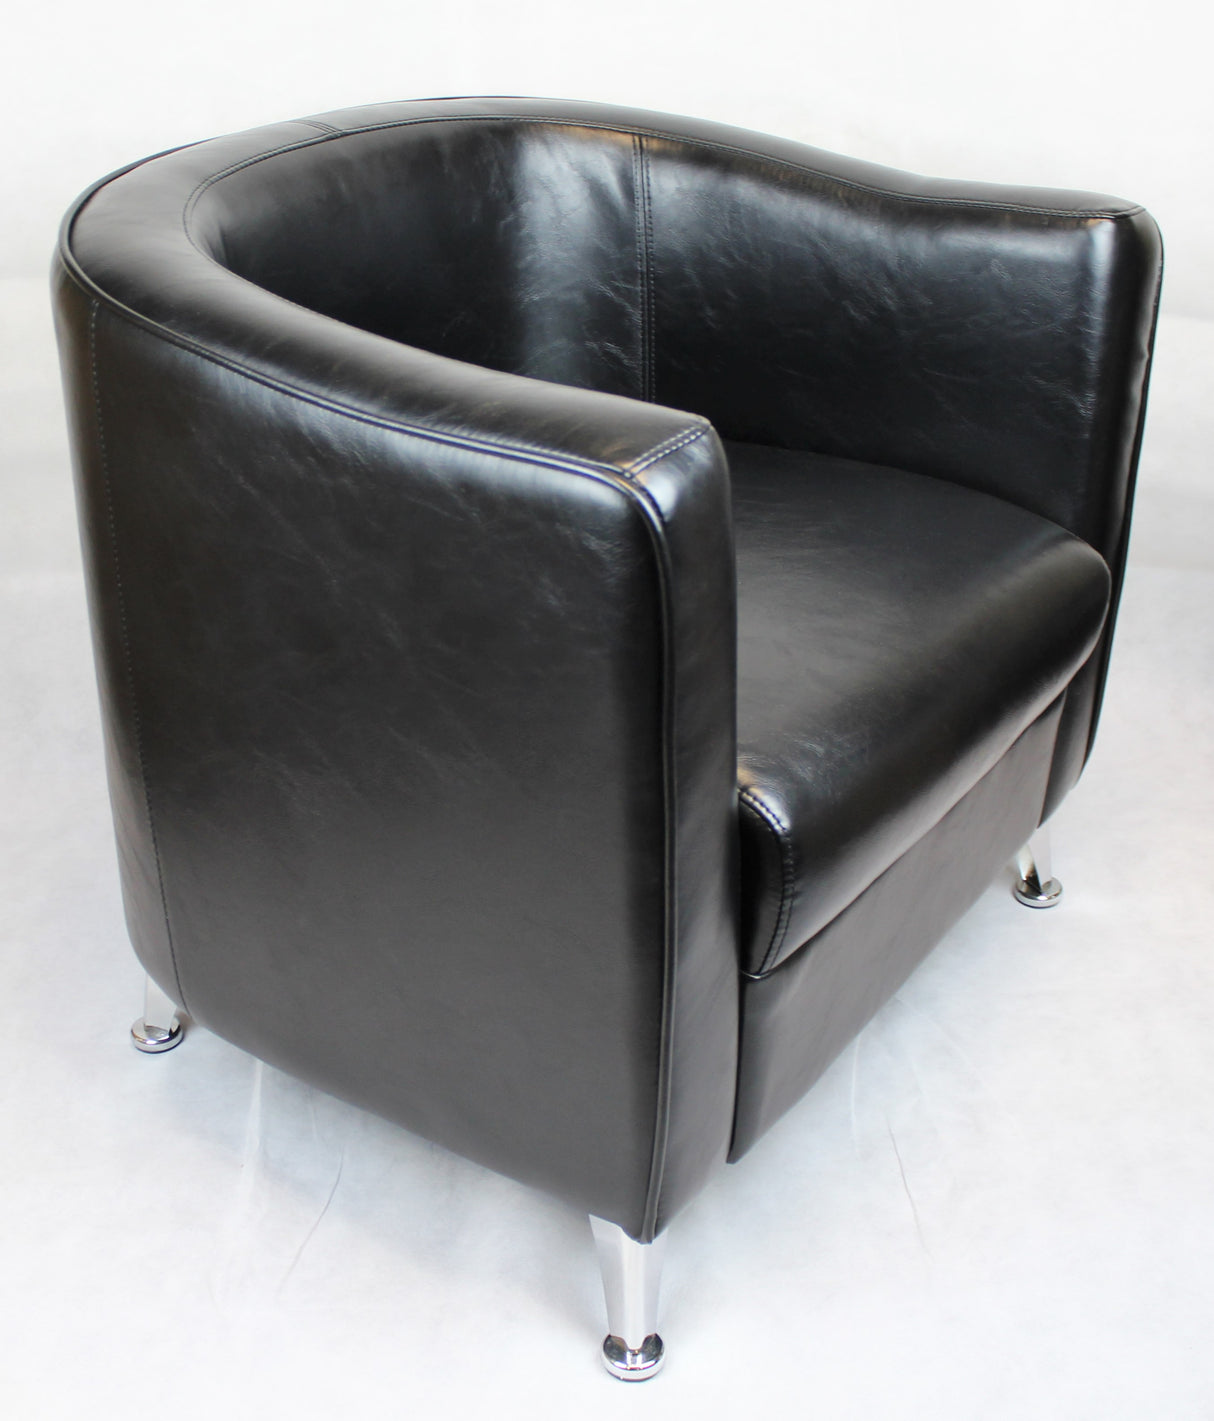 HB-022 Black Tub Reception Chair